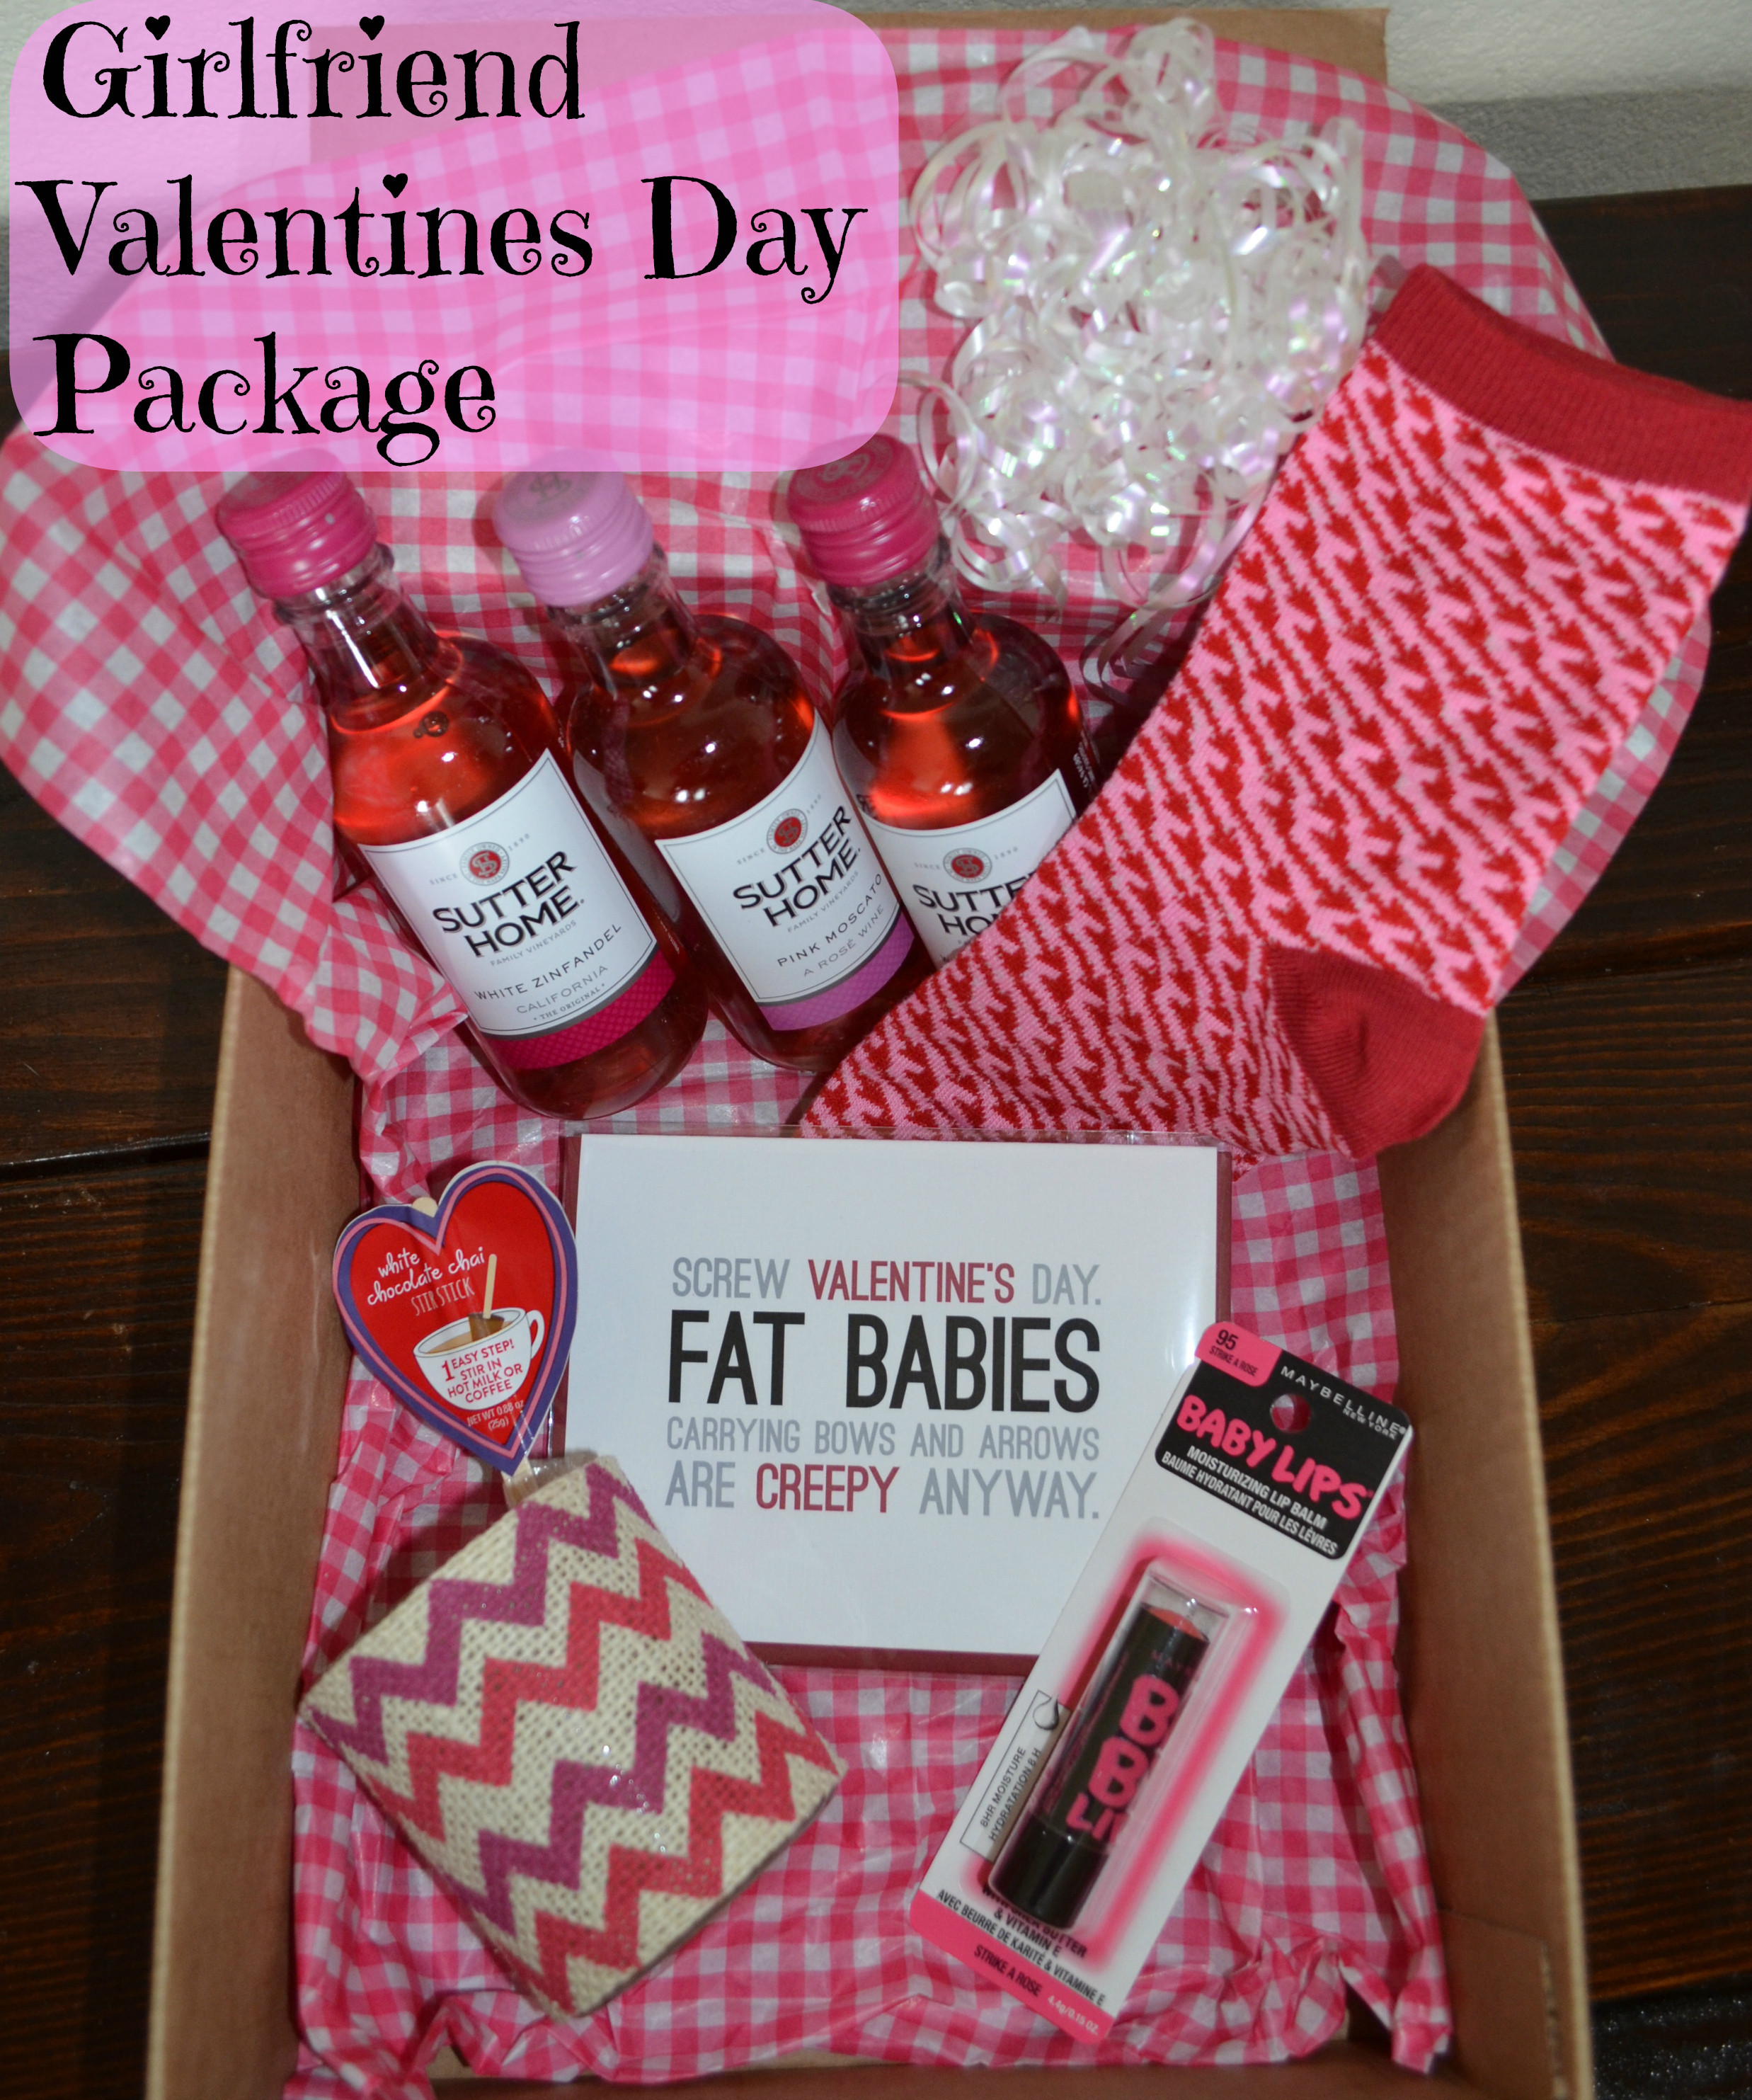 New Boyfriend Valentines Day Gift Ideas
 24 LOVELY VALENTINE S DAY GIFTS FOR YOUR BOYFRIEND